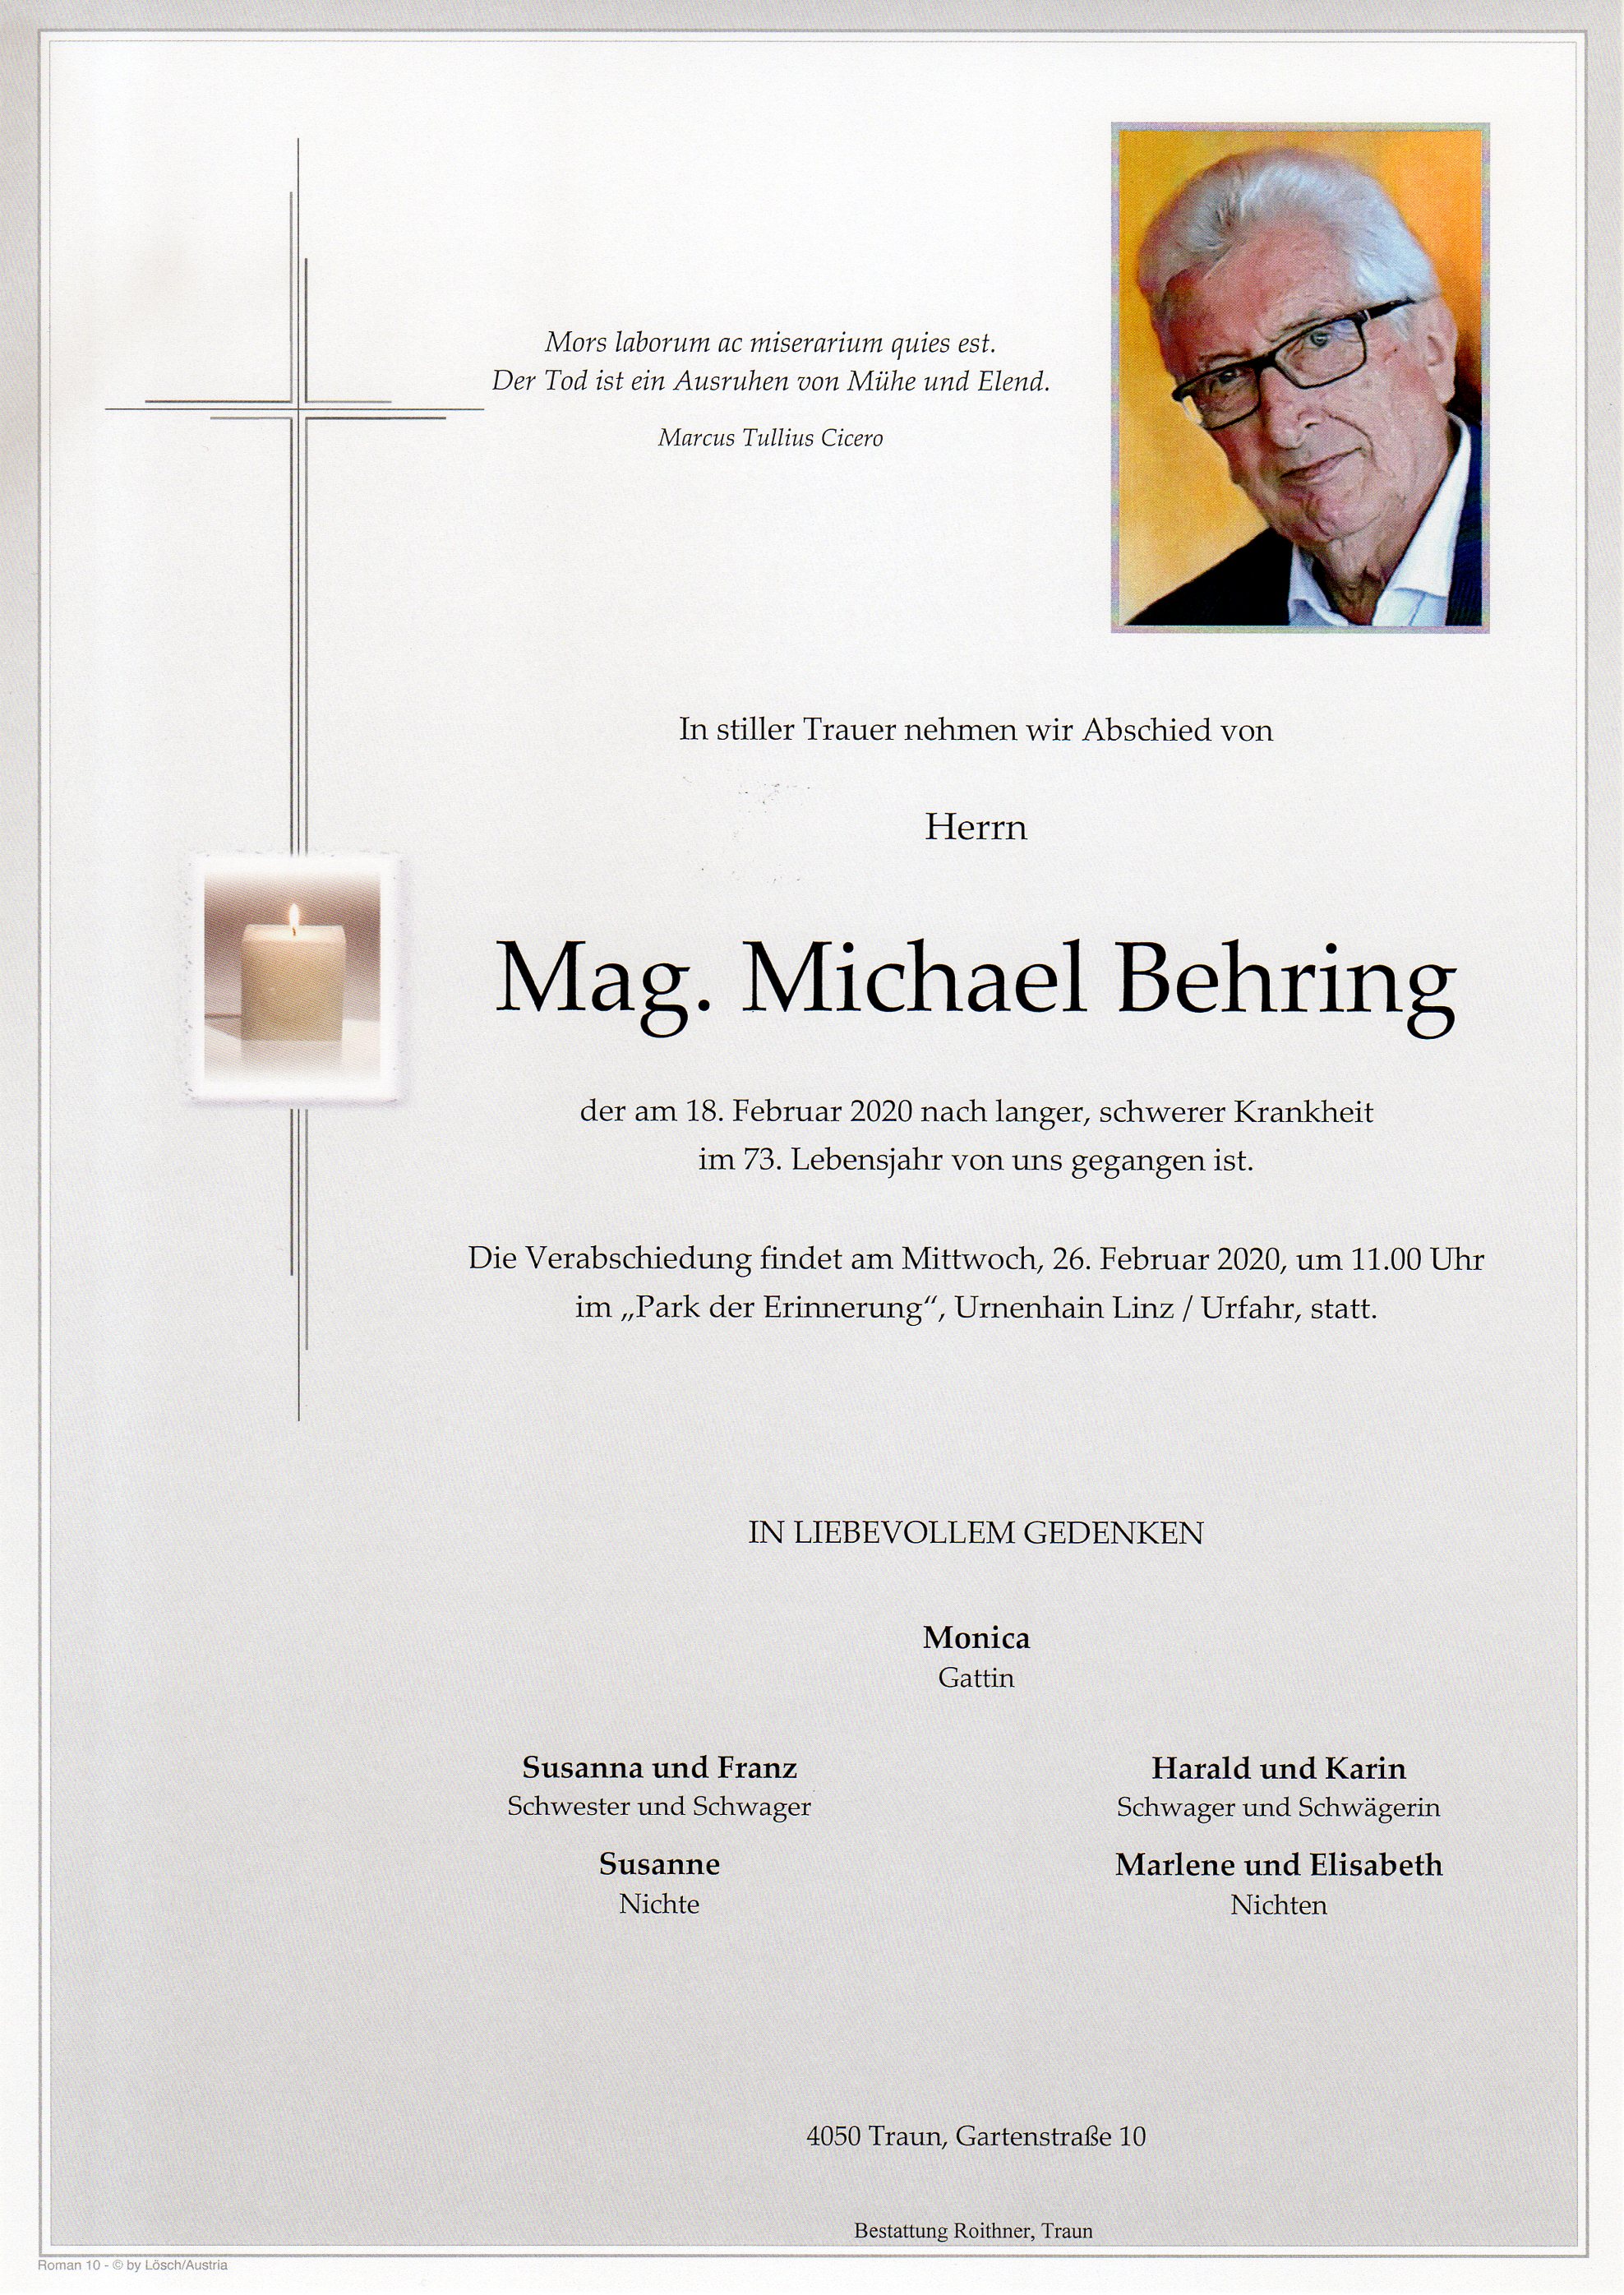 Mag. Michael Behring gestorben